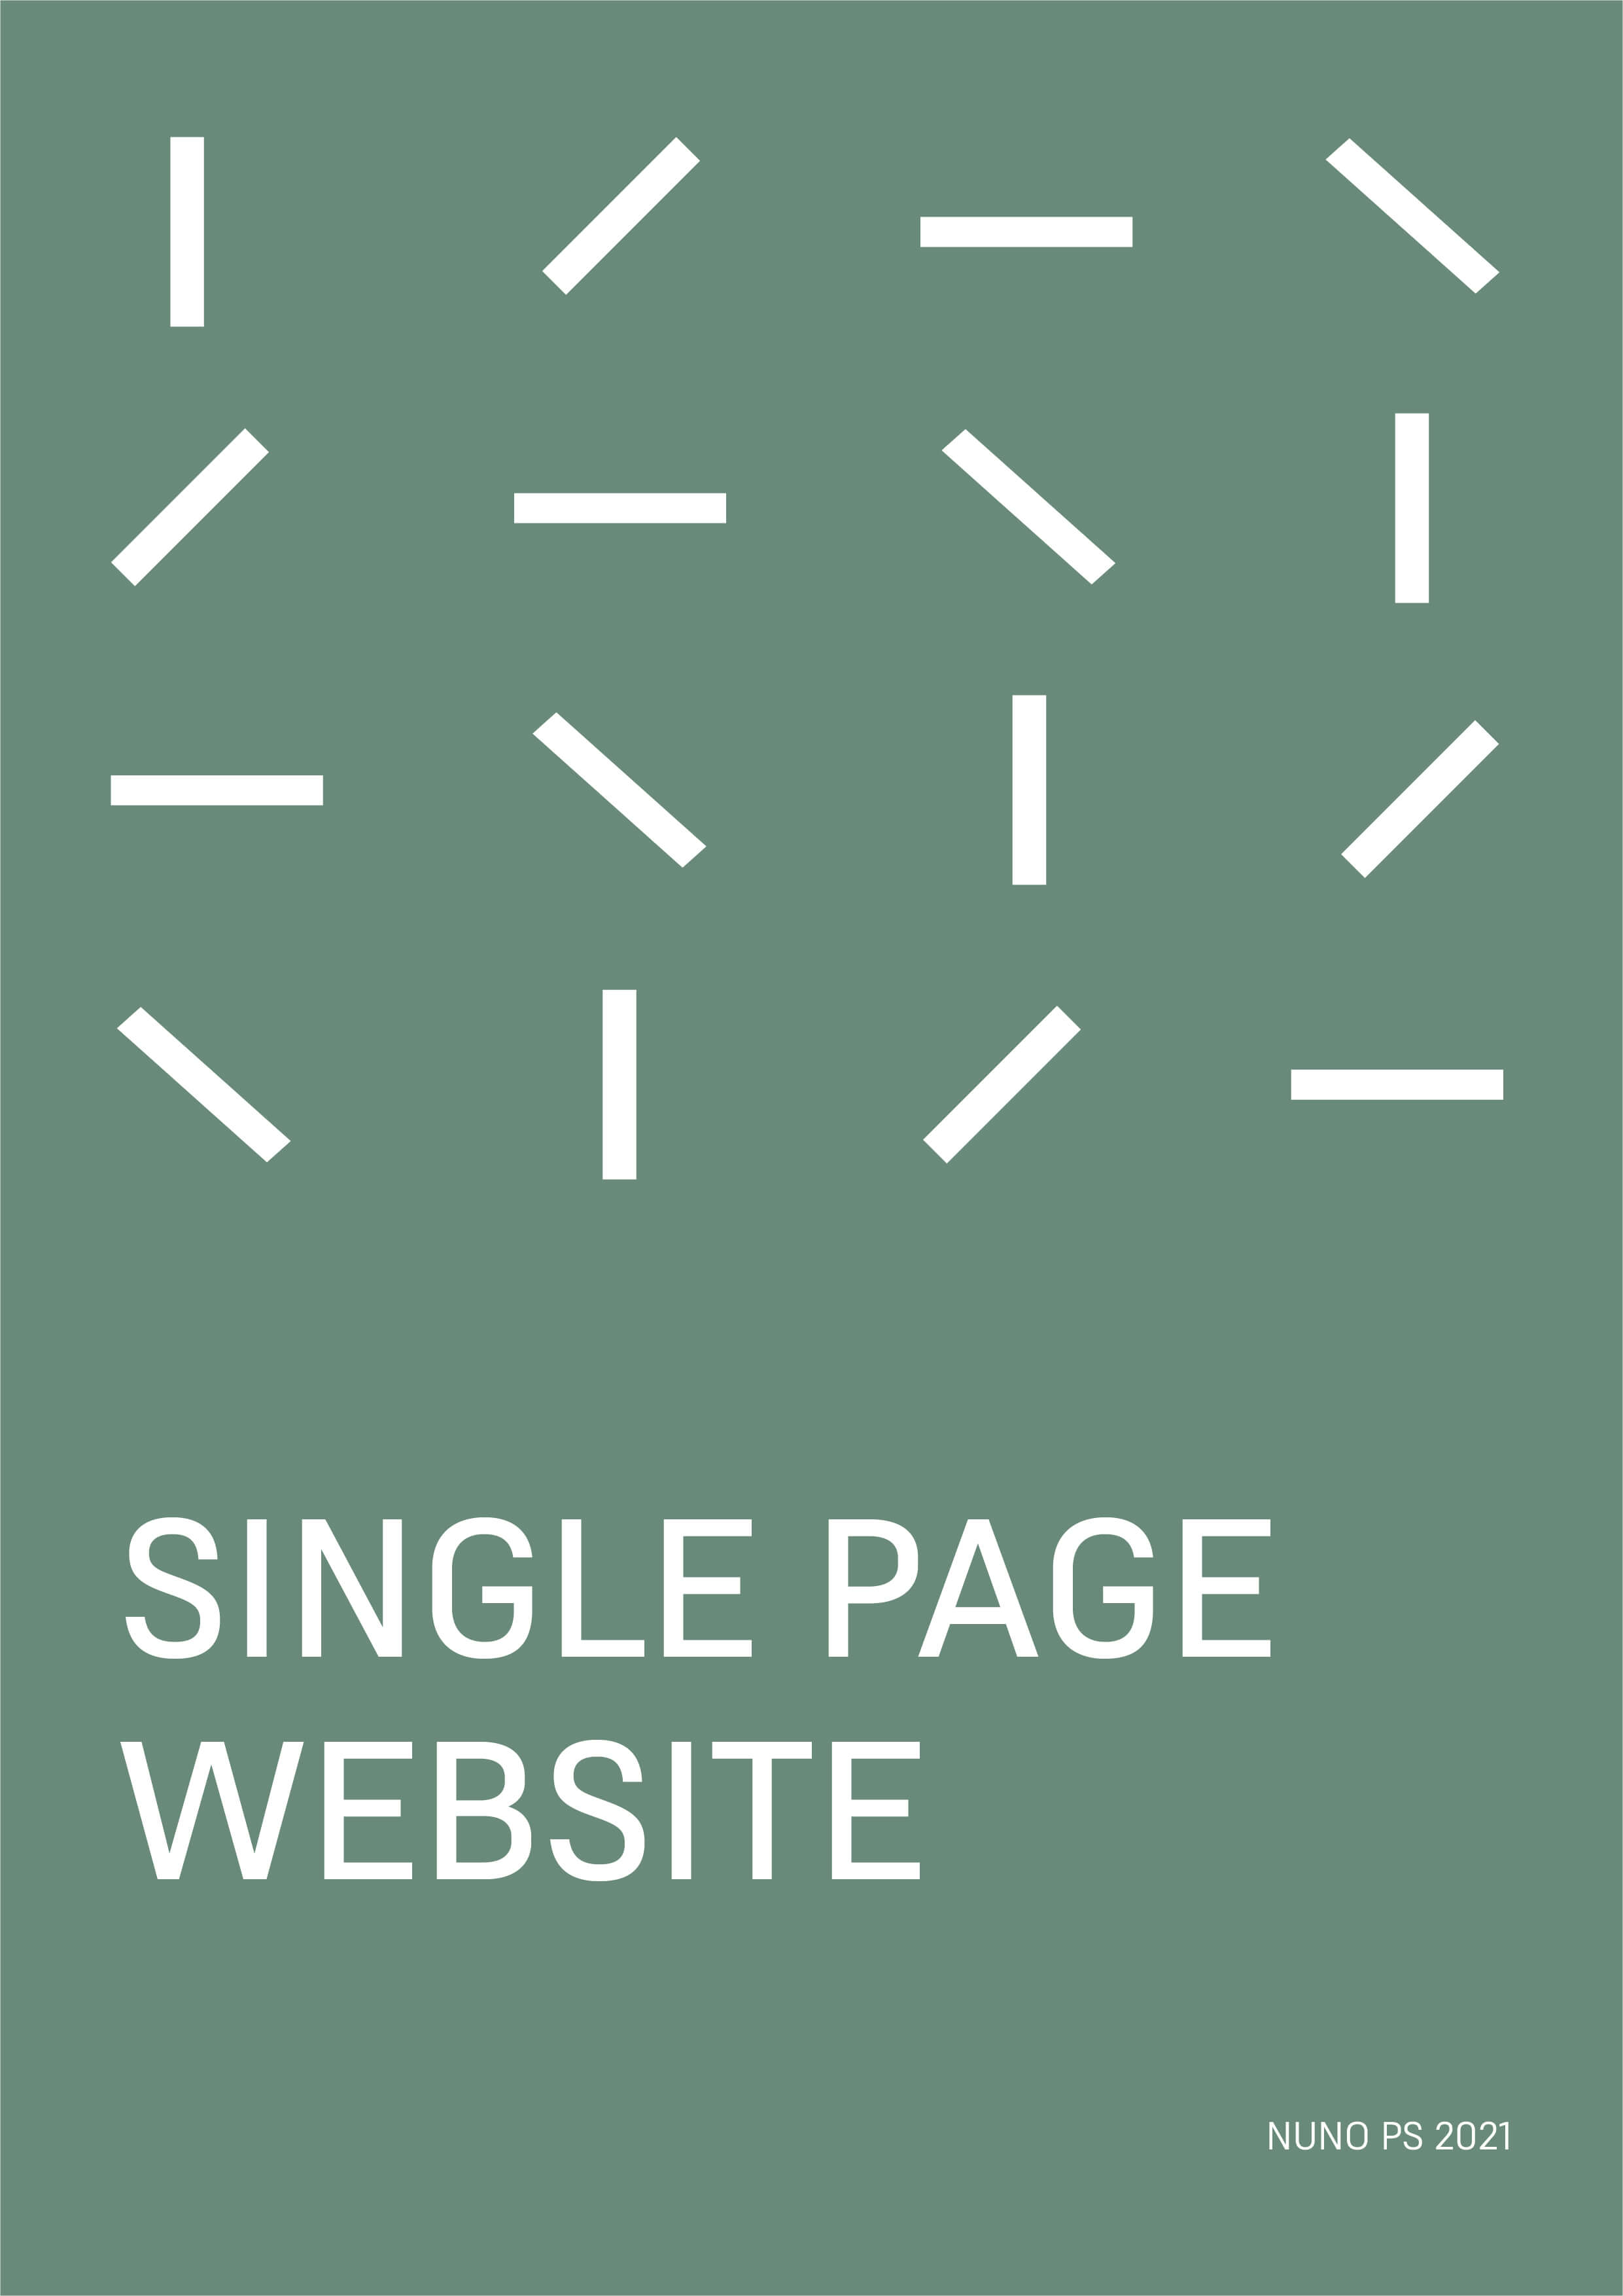 Single page website image